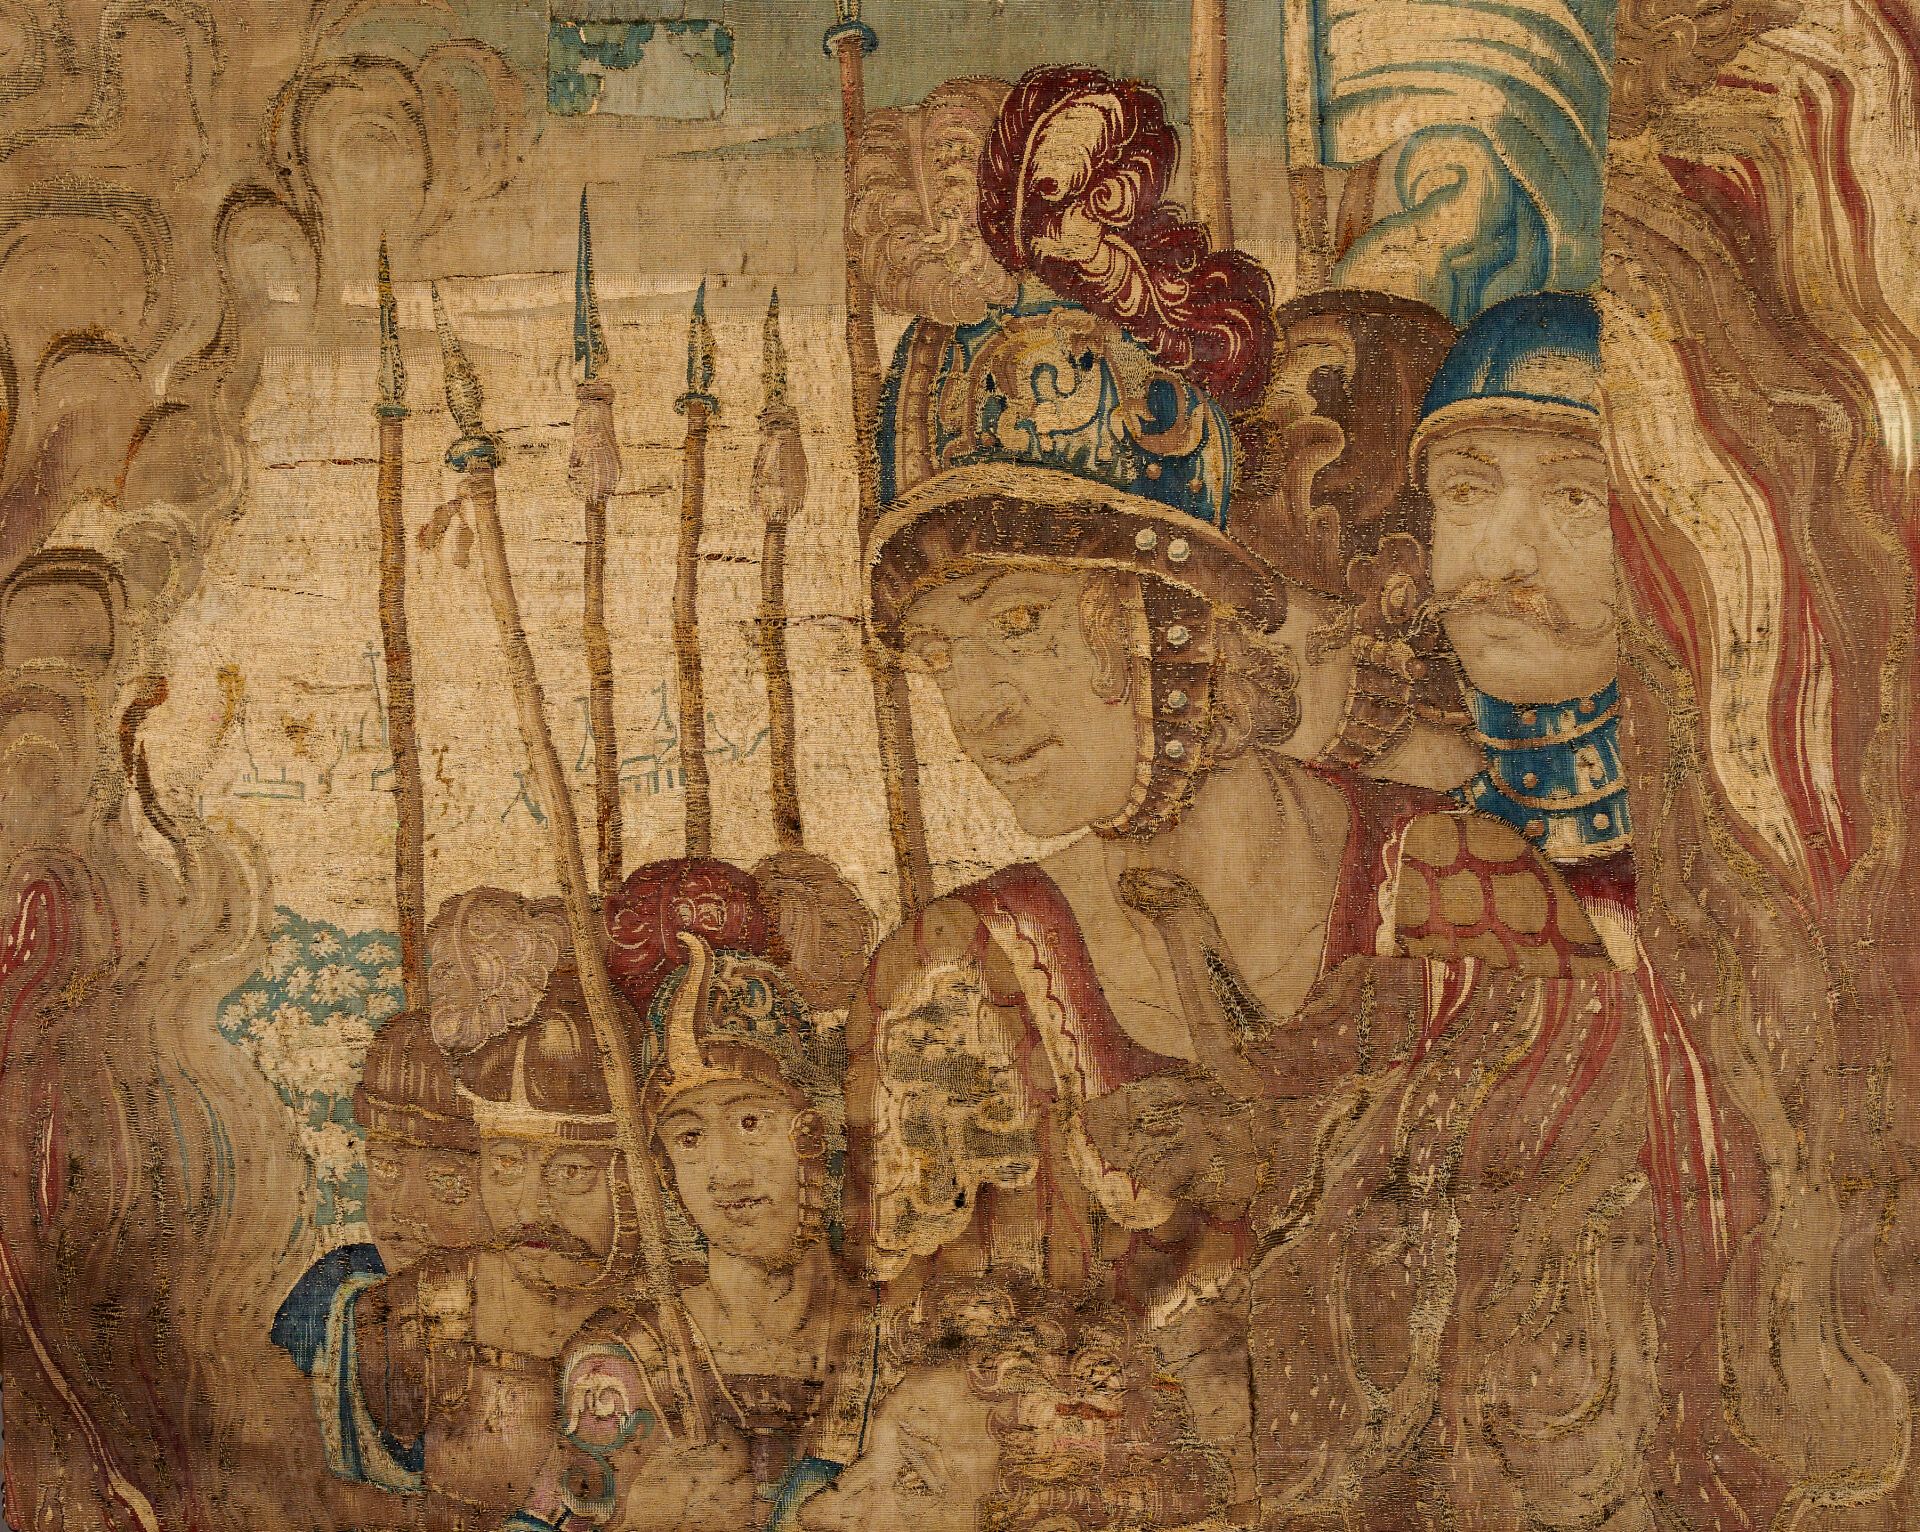 Null "亚历山大大帝中的士兵（？）
羊毛挂毯碎片。
XVII-XVIII 世纪。
106 x 132 厘米
修复